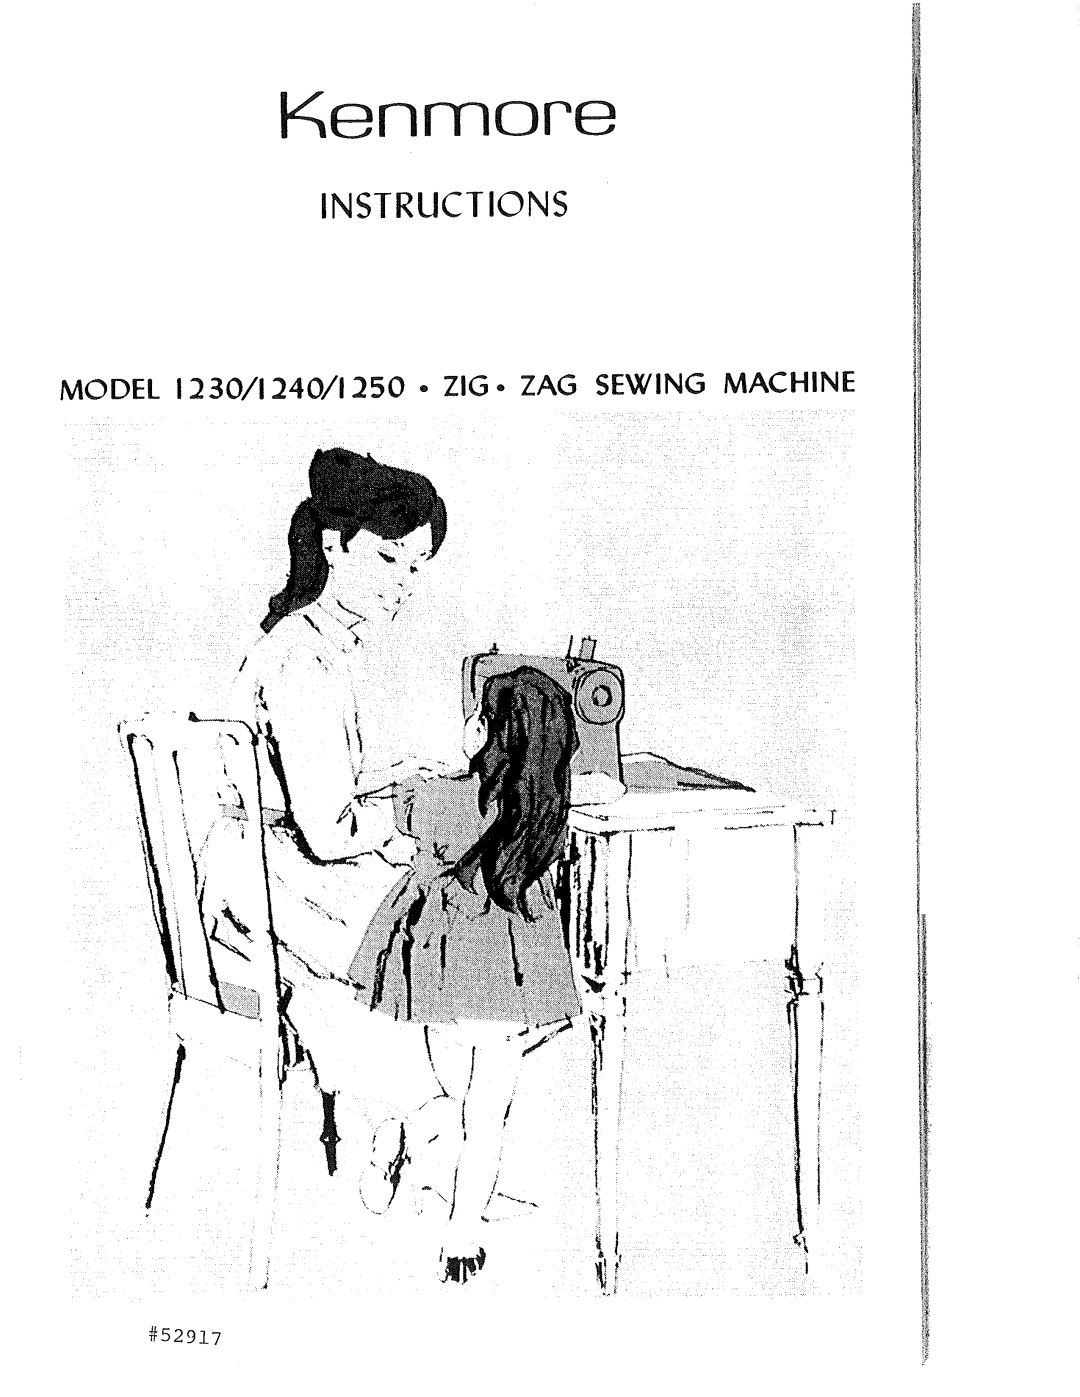 Kenmore manual MODEL 1230/1240/1250 - ZIG o ZAG SEWING MACHINE, Kenmope, Instructions, #52917 